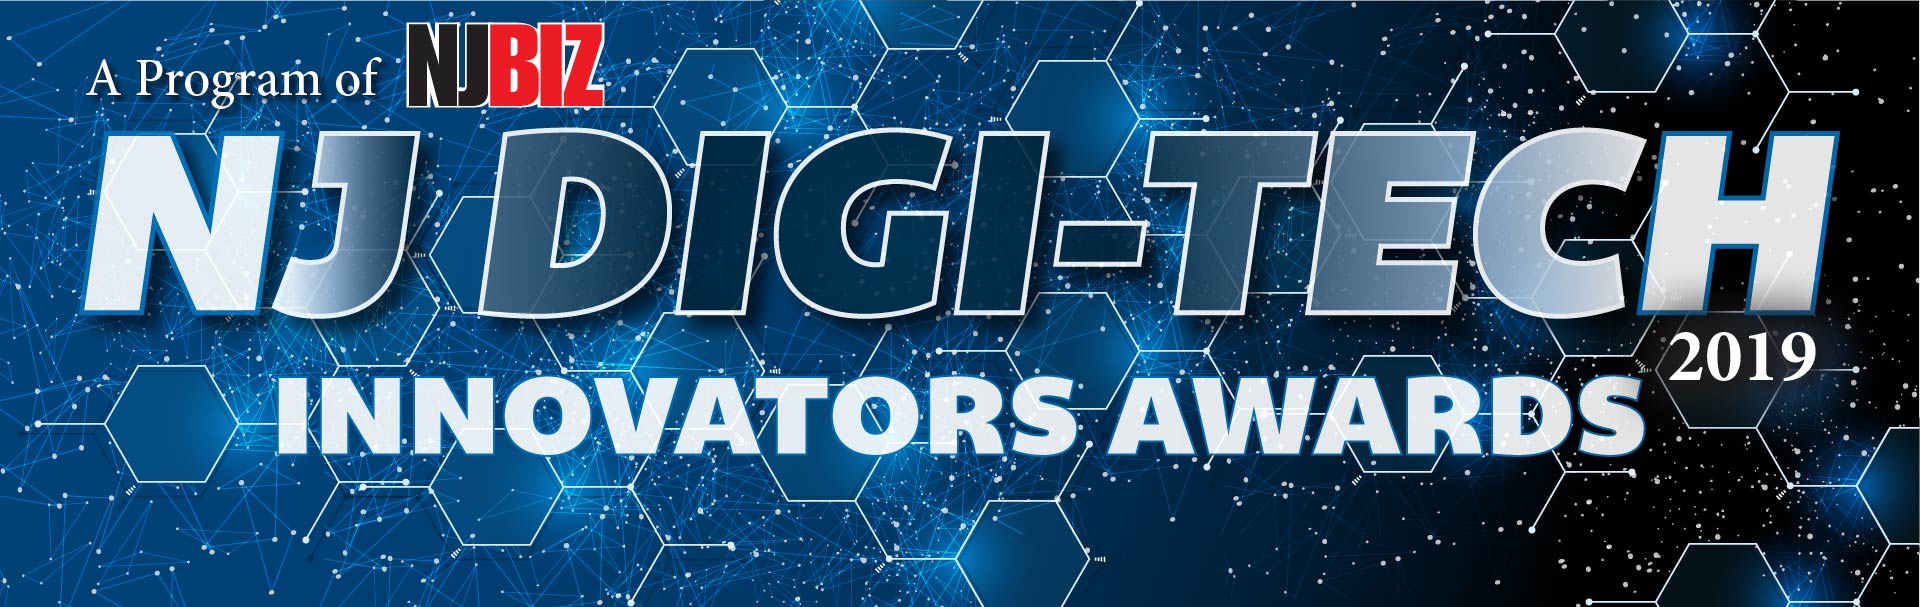 Winner of the 2019 NJ Digi-Tech Innovators Awards